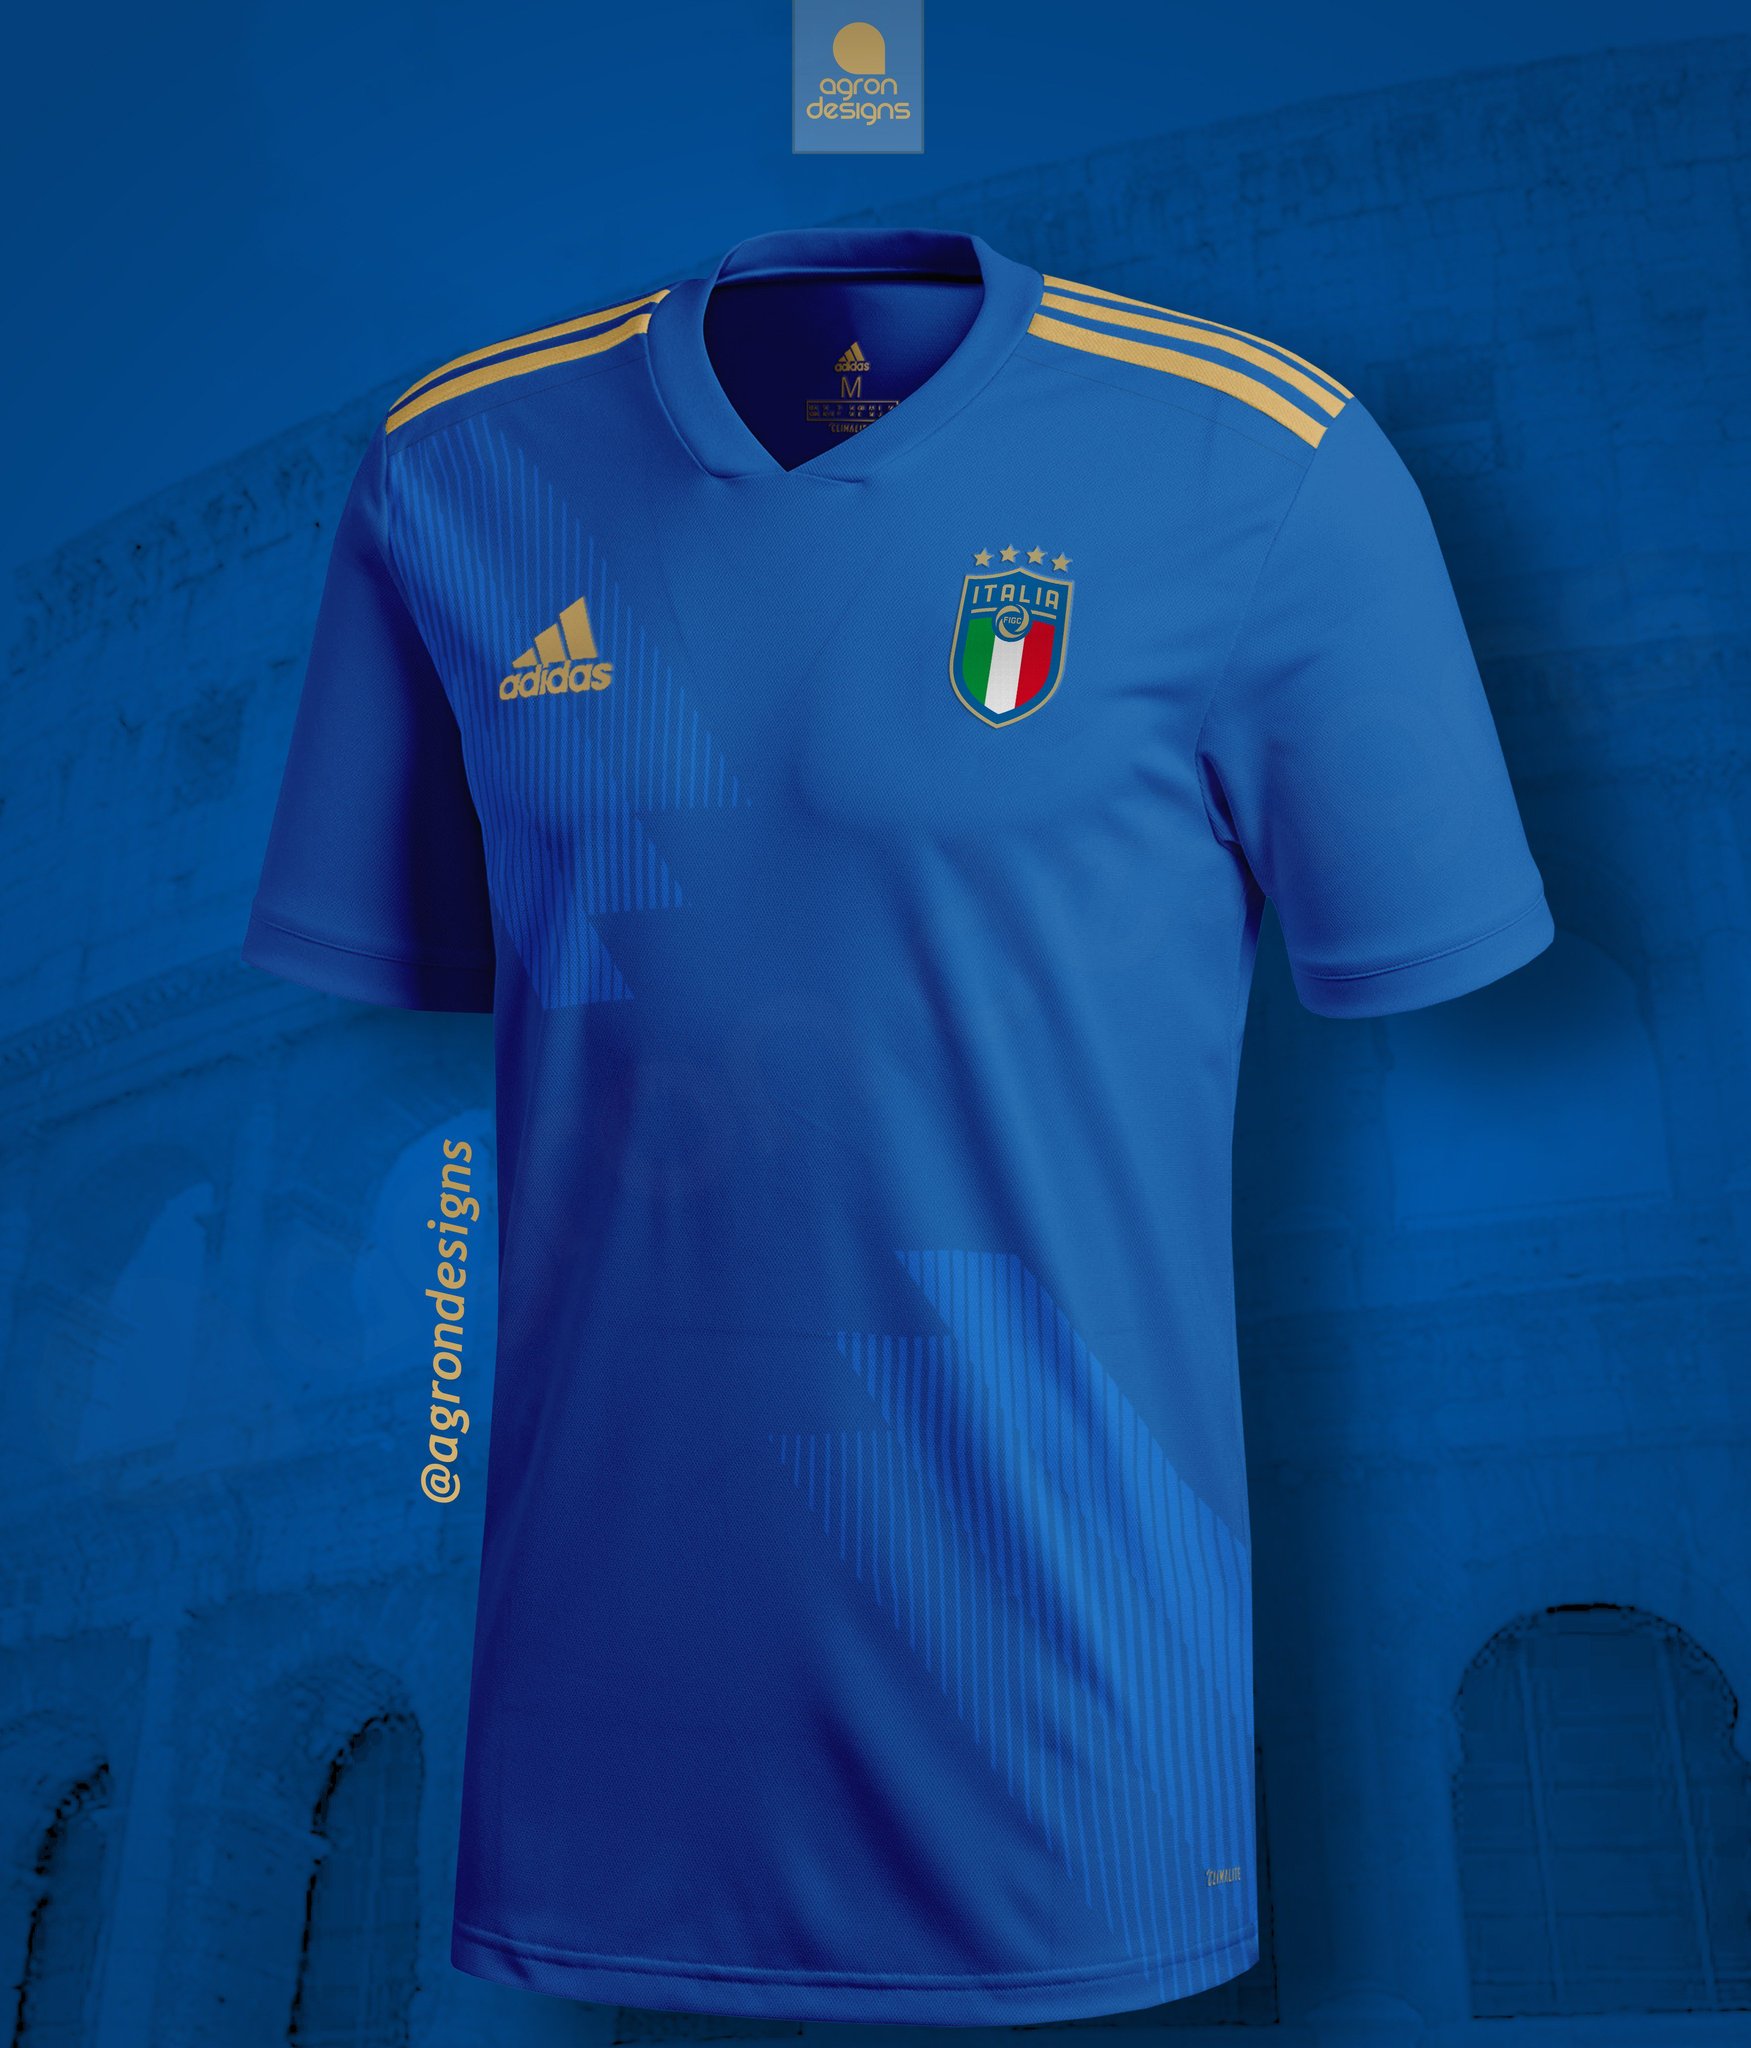 Agron Meta on Twitter: "Italy X Adidas (repost) #oldproject #adidas  #threestripes #concept #jersey #kit #maglia #kidesign #calcio #football  #style #italia #azzuri #nike #nationsleague #uefa #fifa #heretocreate  #worldcup #facebook #instagram #insta ...